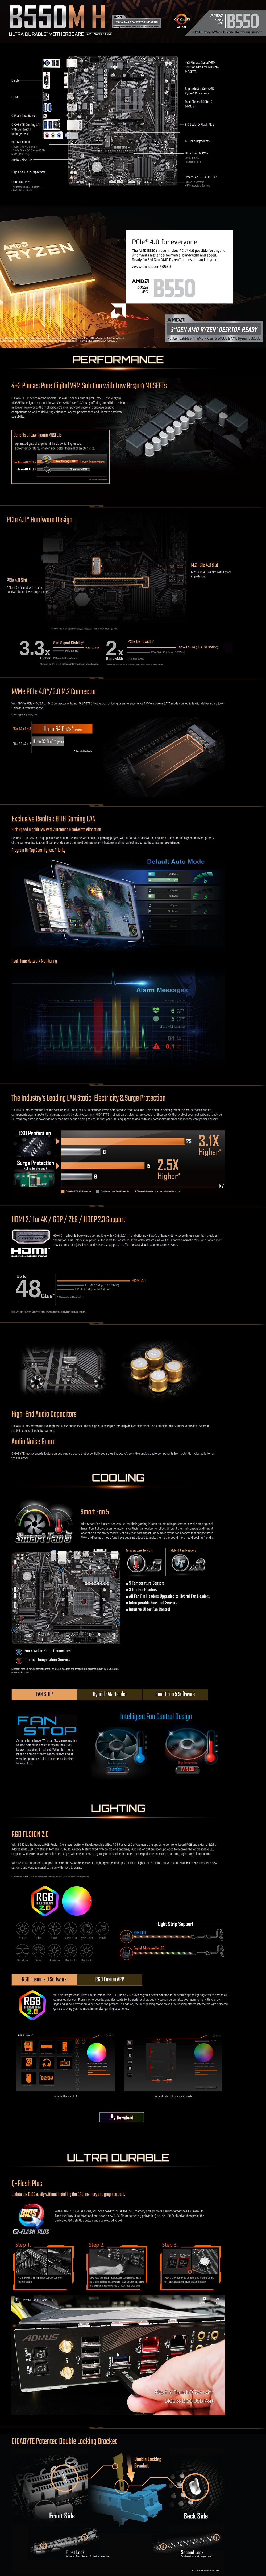 Gigabyte B550M H AMD Ryzen mATX Motherboard